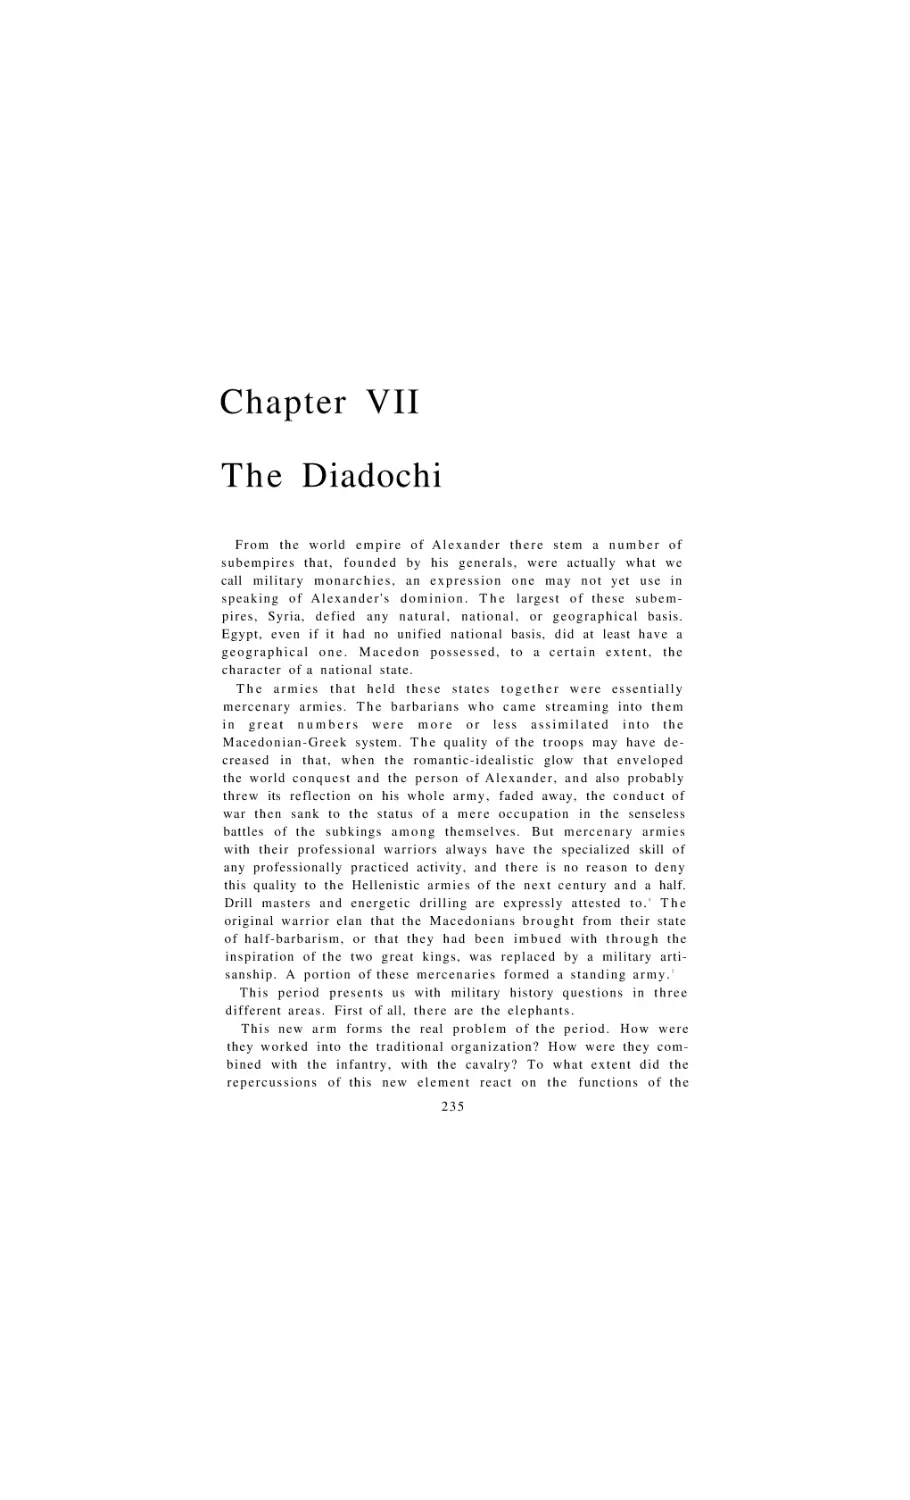 The Diadochi